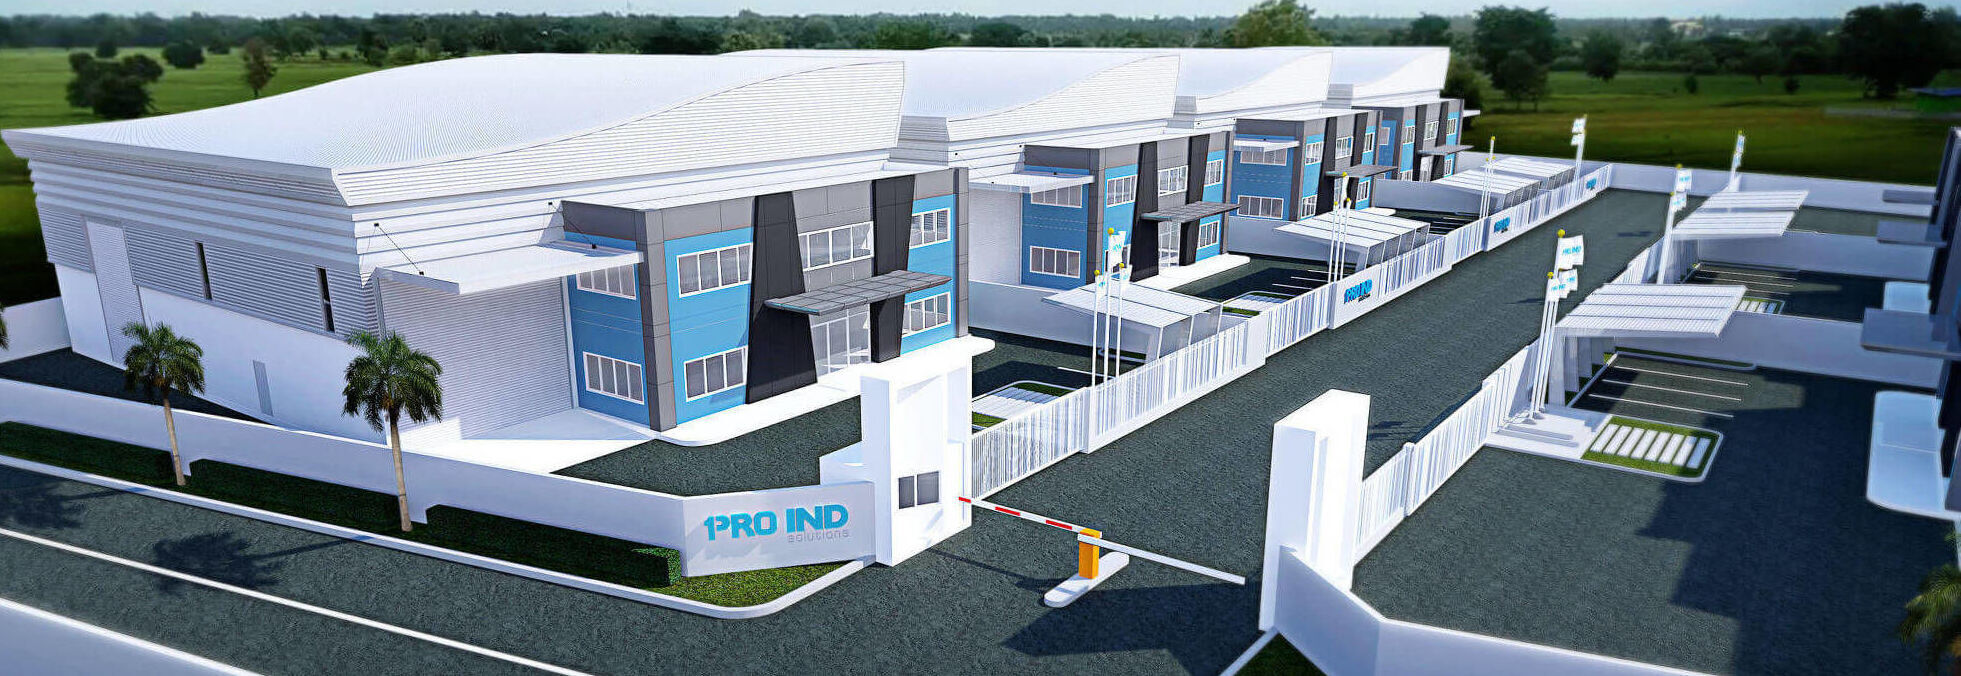 PRO IND Factory Park 3 Project 